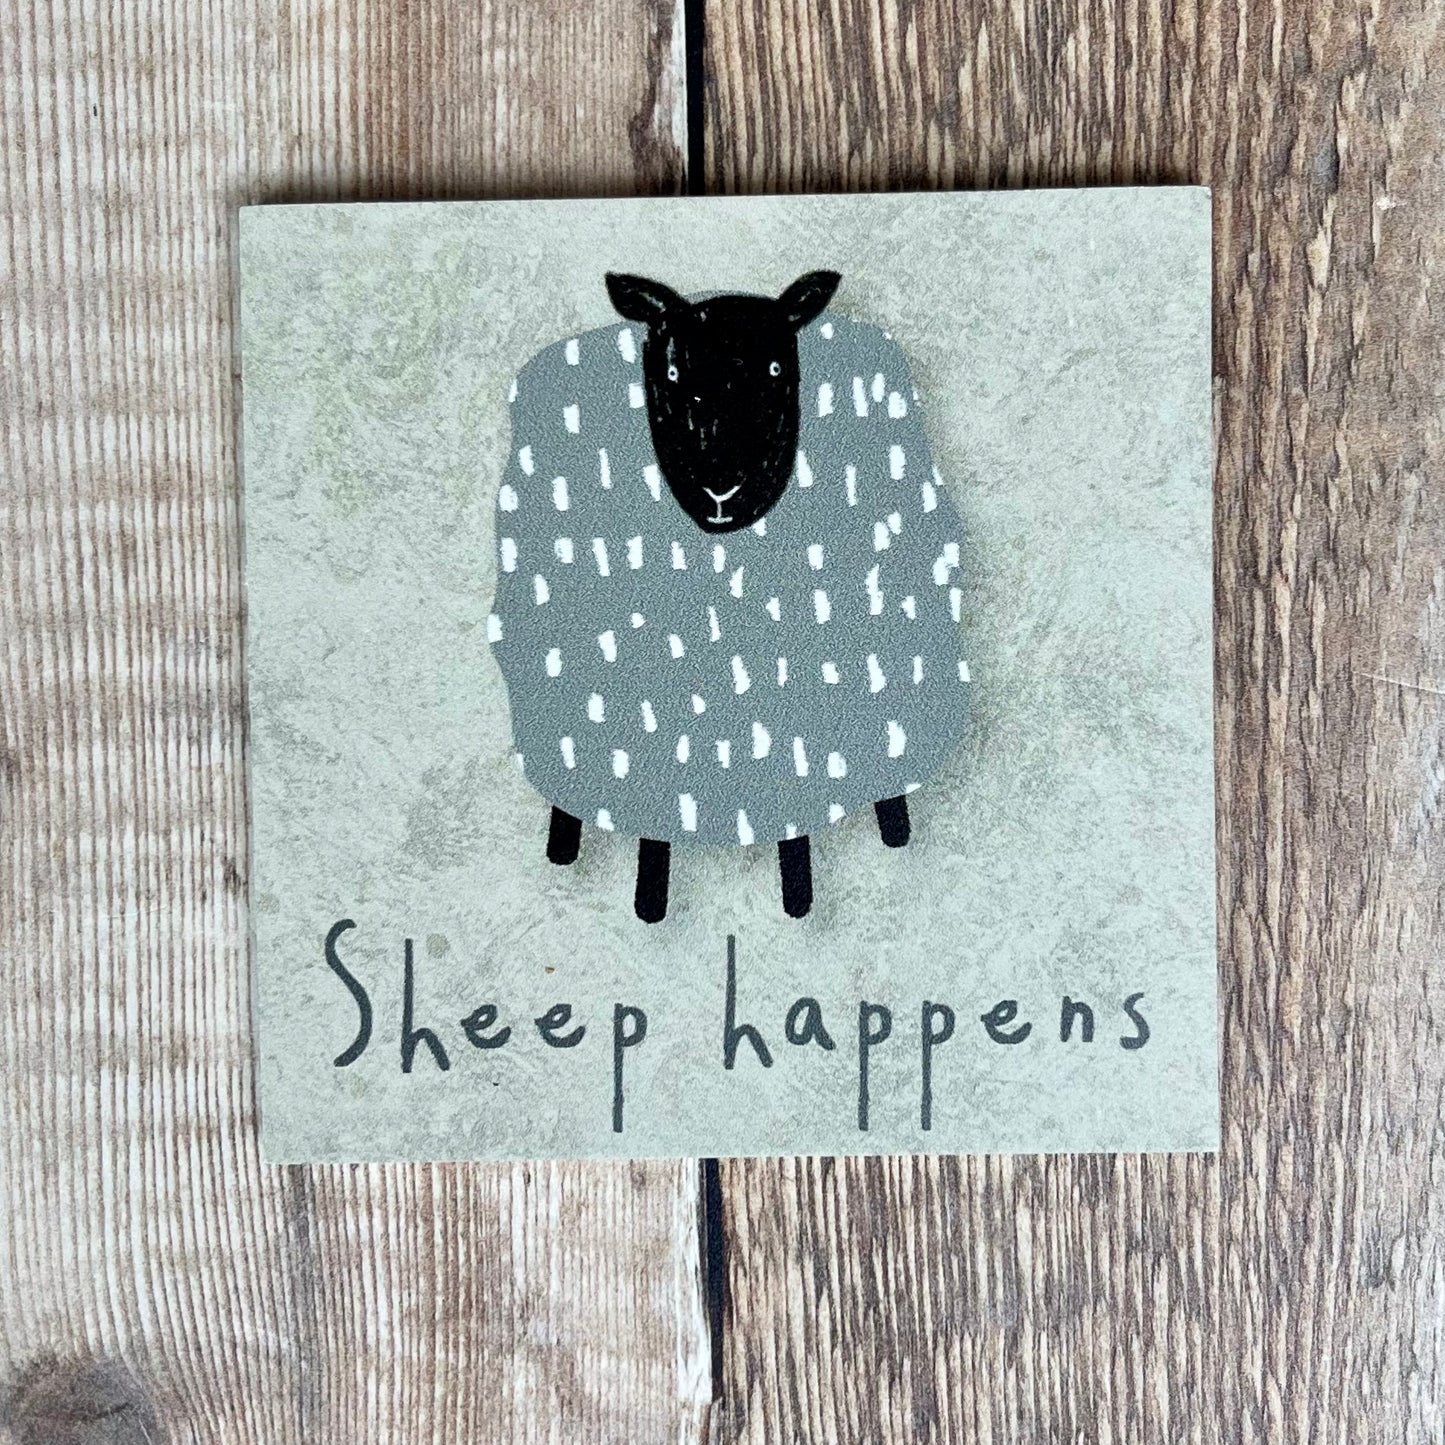 Sheep Happens Coaster Set